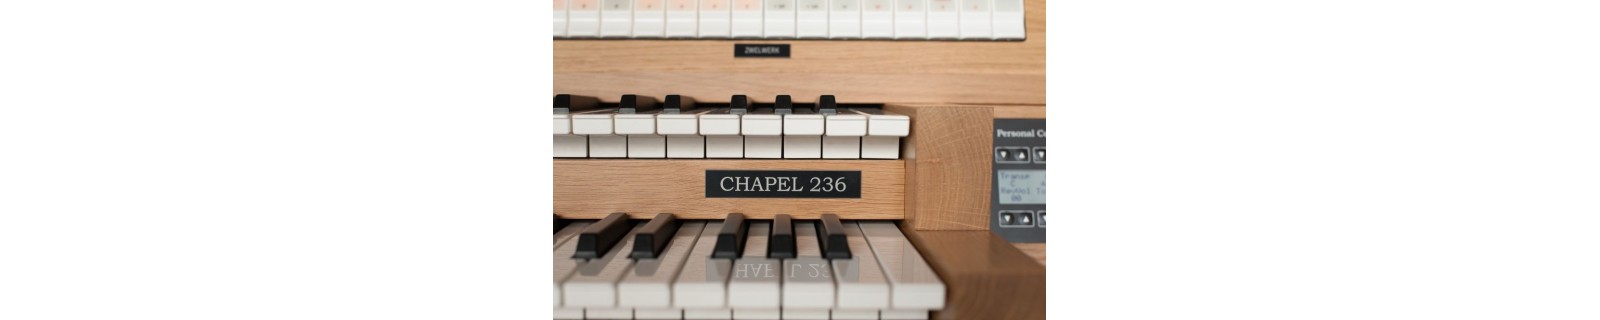 Chapel sorozat